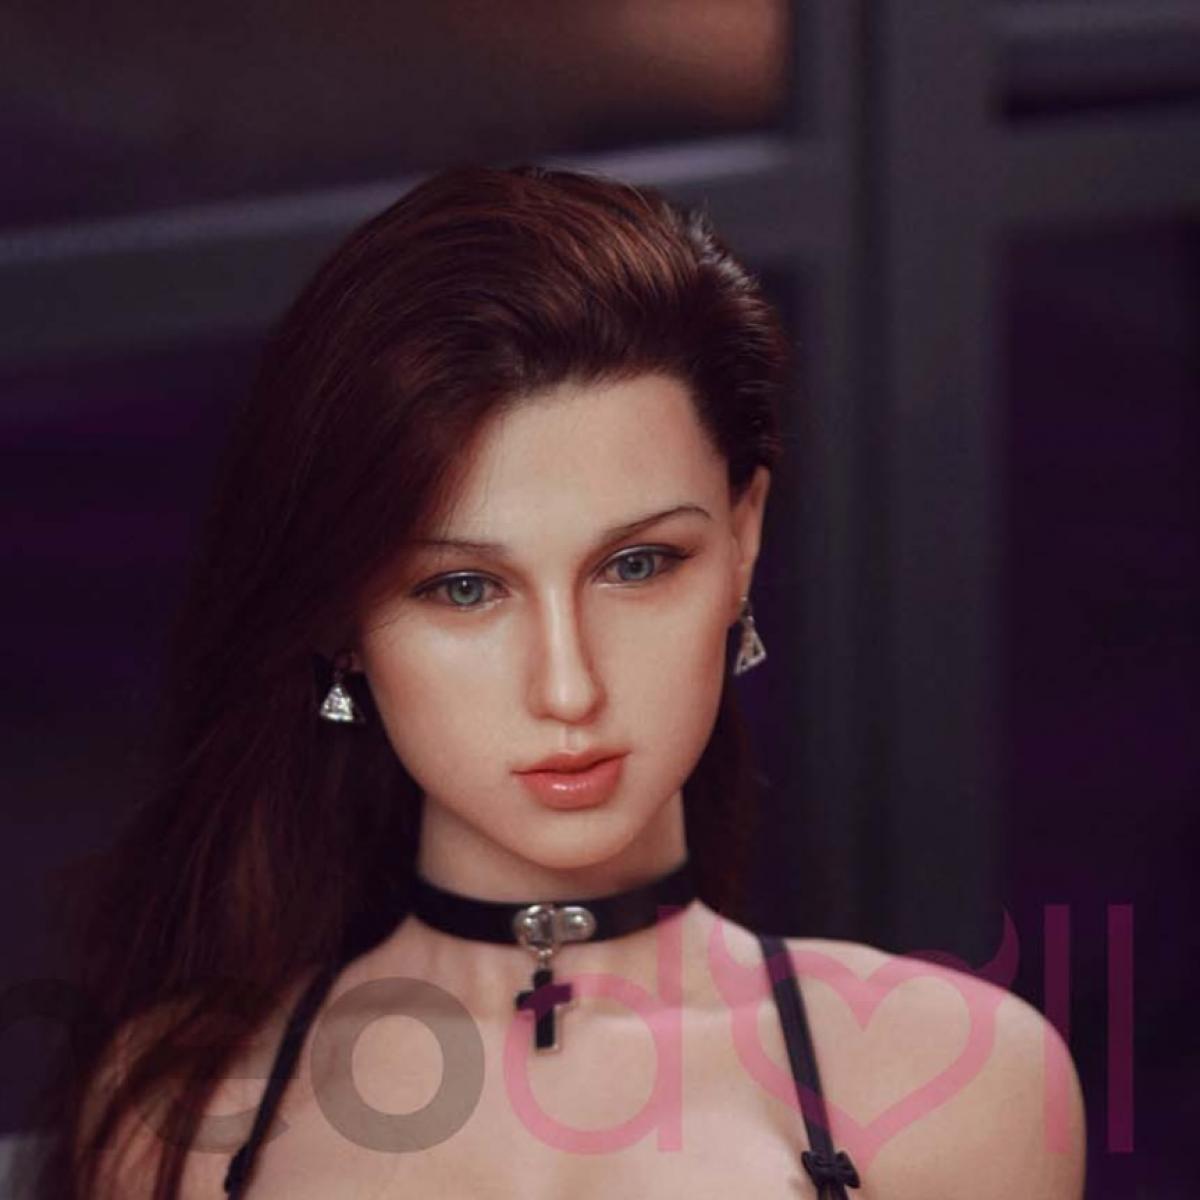 Neodoll Sugar Babe - Adele - Realistic Sex Doll Head- M16 Compatible - Natural